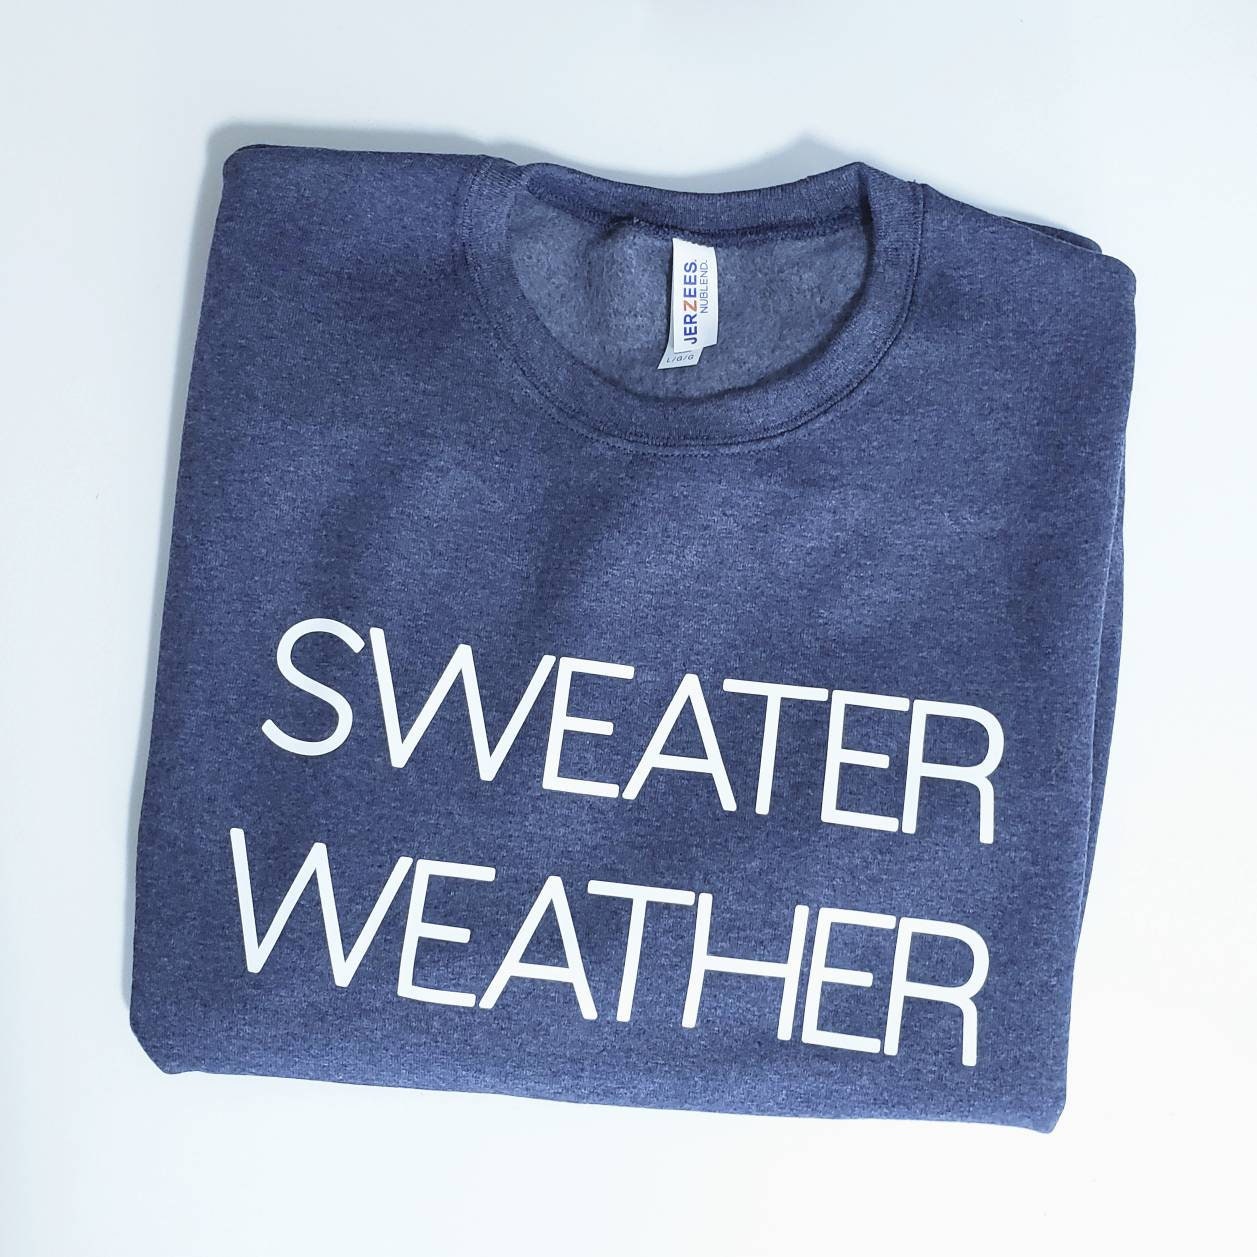 Sweater Weather Super Comfy Crew Neck Unisex Sweatshirt